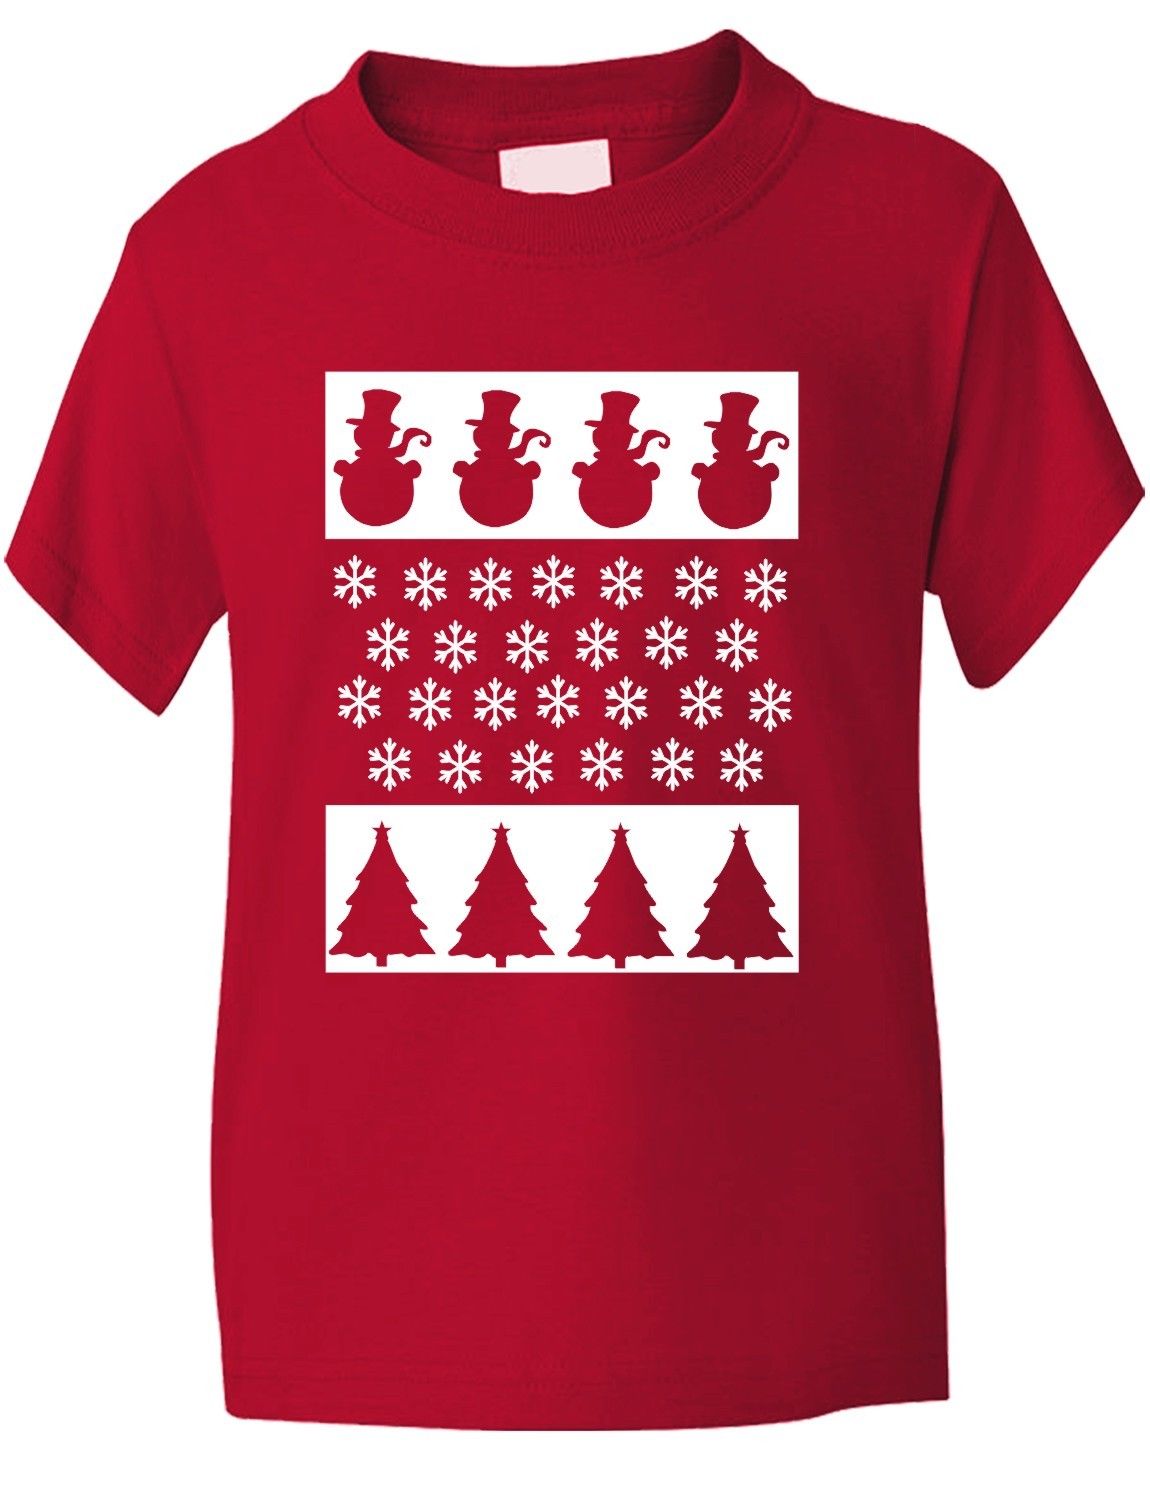 Christmas Scene / Snowman Boys Girls T-Shirt